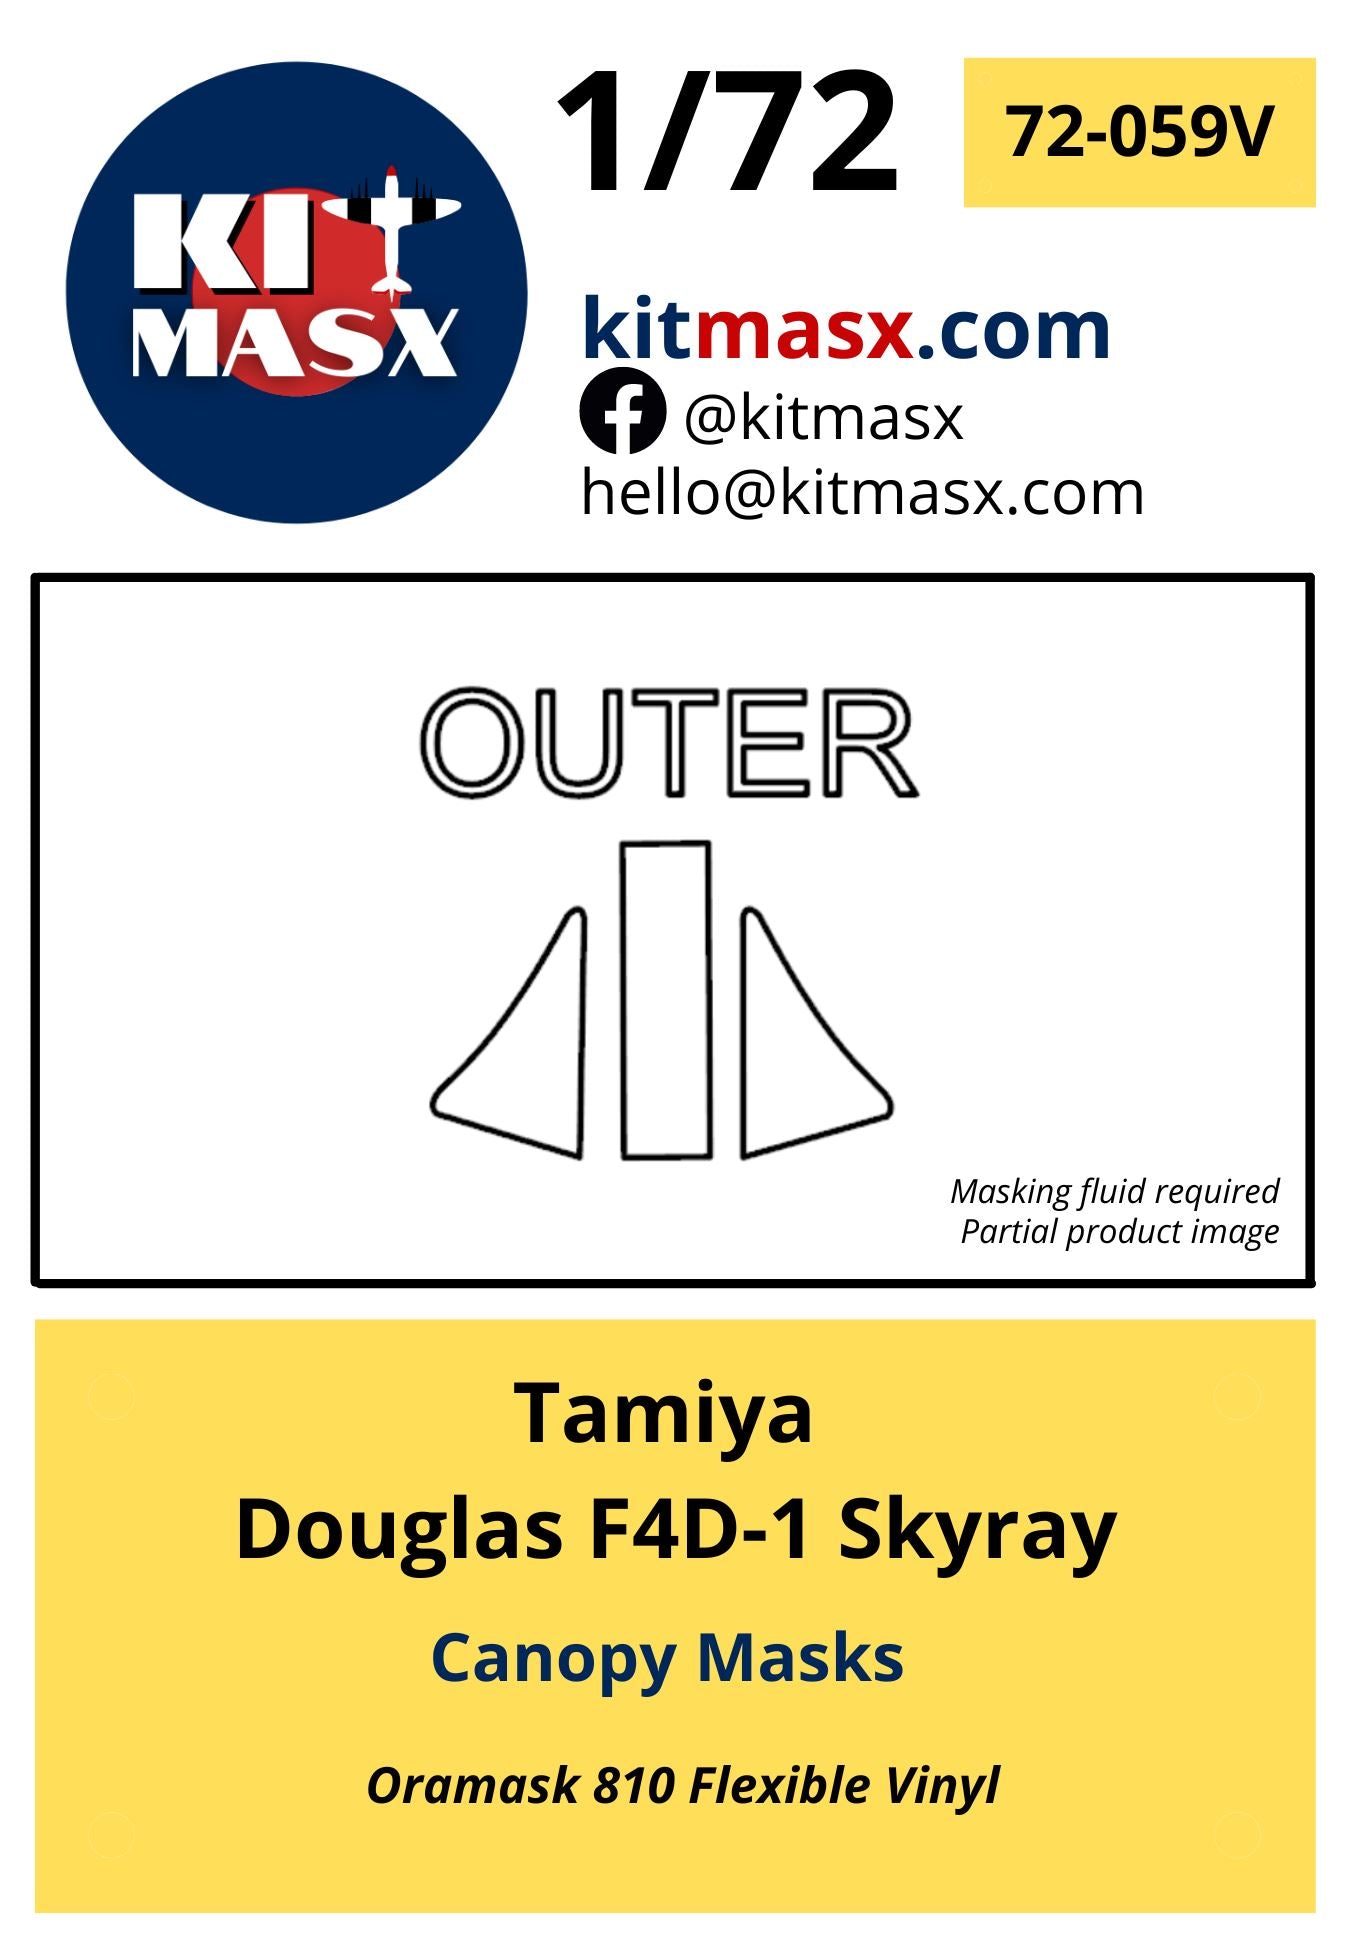 Tamiya Douglas F4D-1 Skyray Canopy Masks Kit Masx 